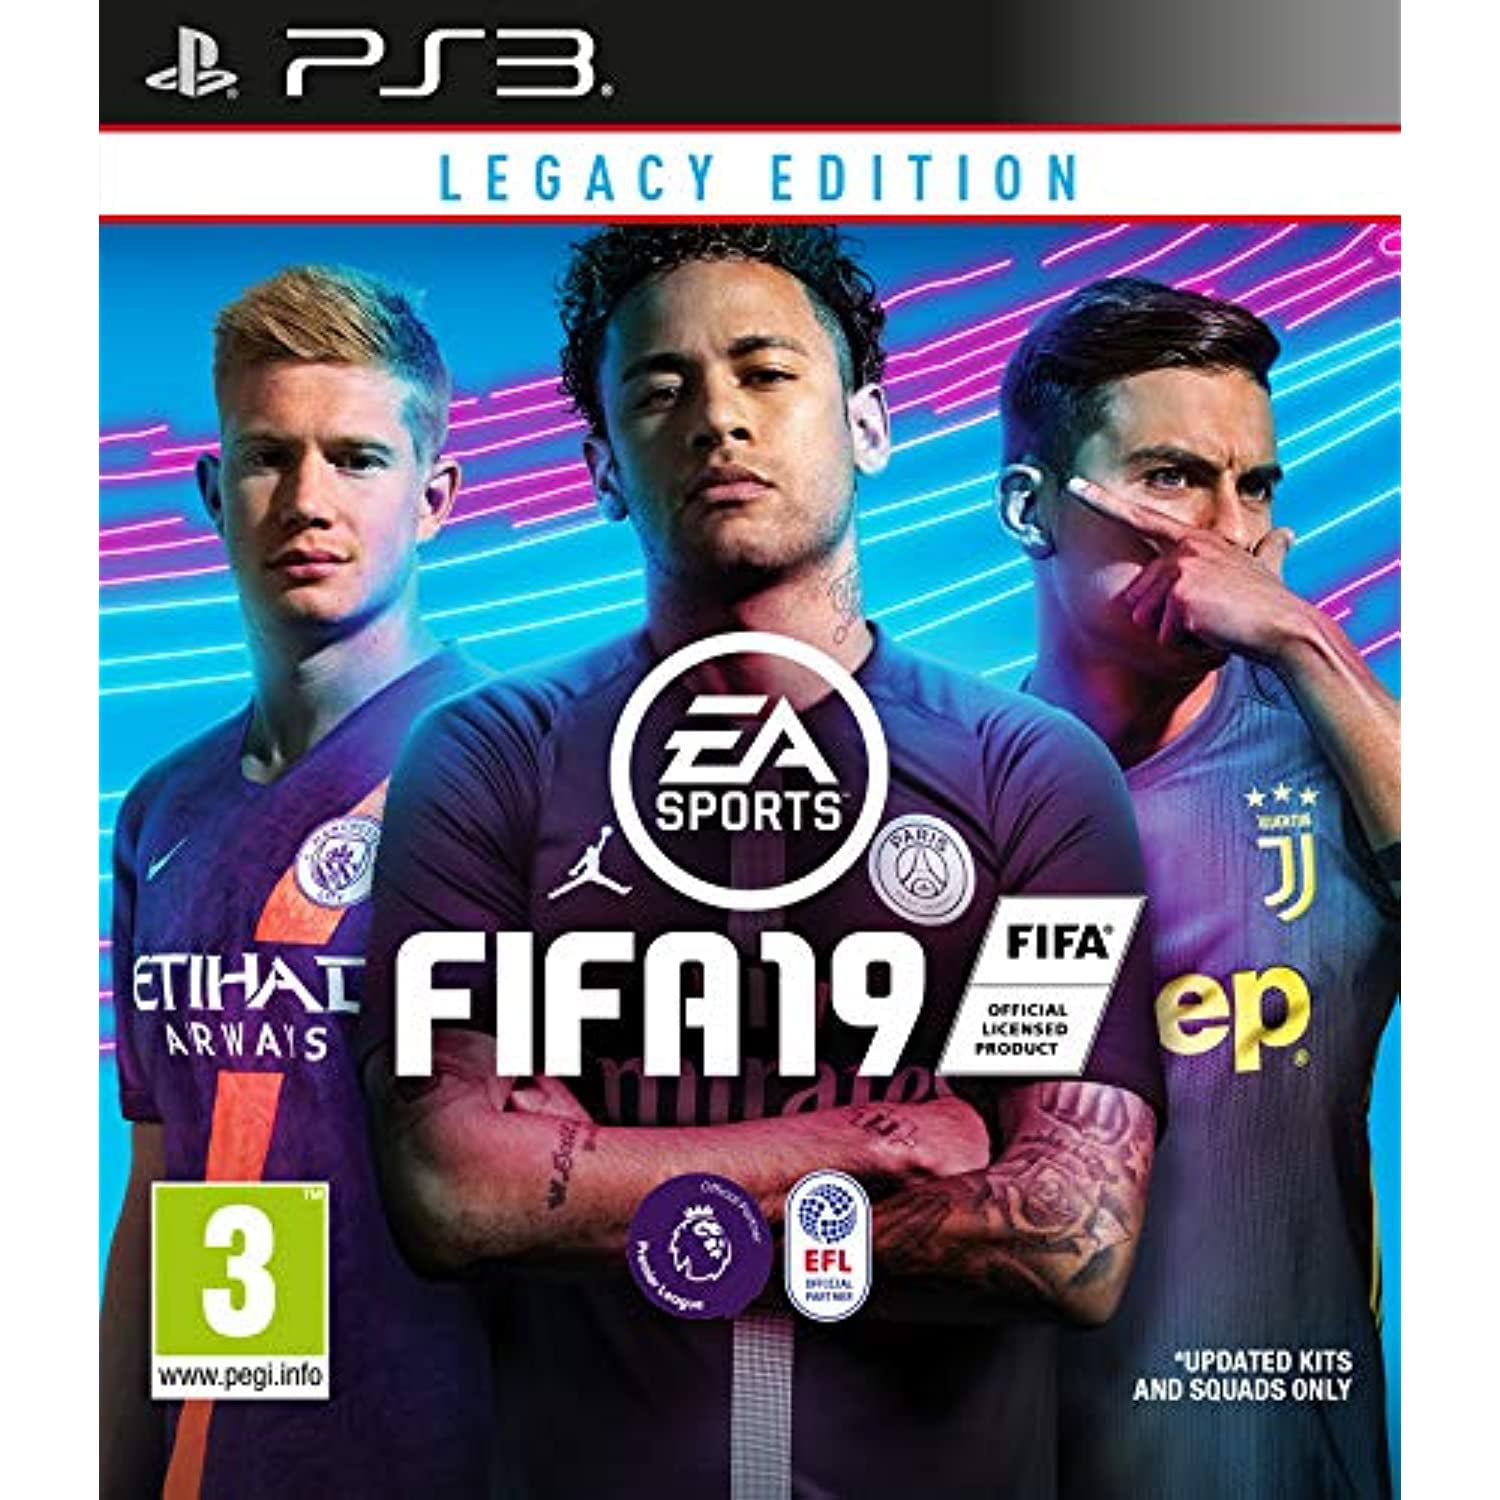 FIFA 18 Legacy Edition Electronic Arts Xbox 360 Digital